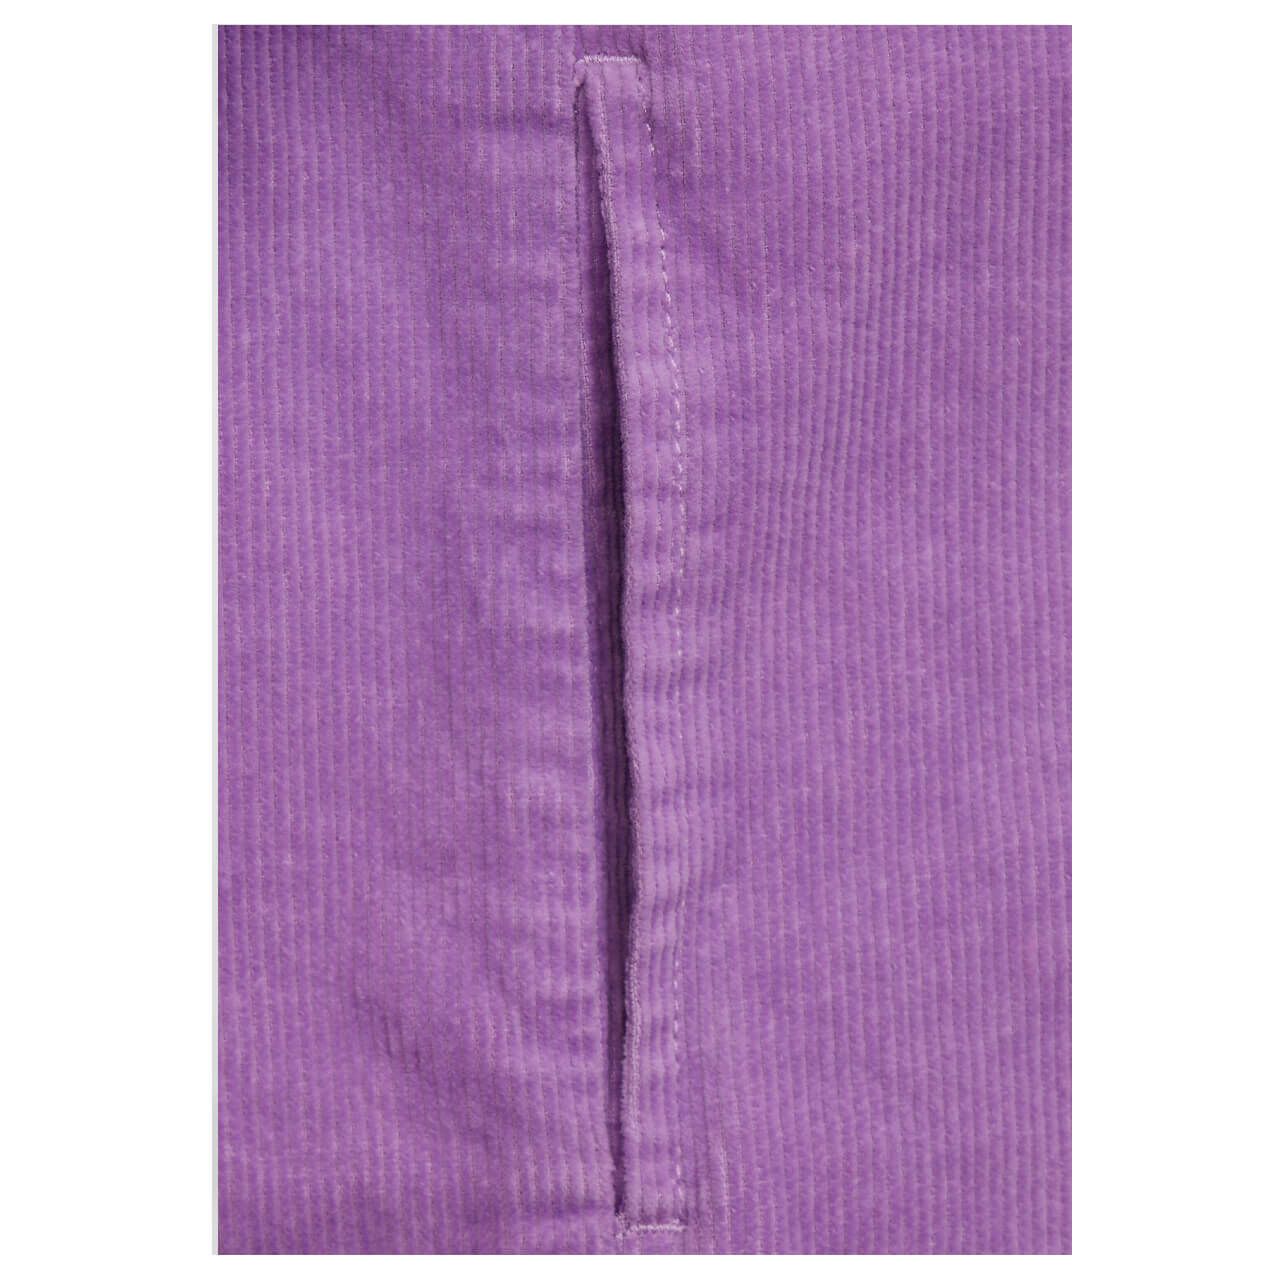 Cecil Damen Jacke Corduroy Overshirt sporty lilac